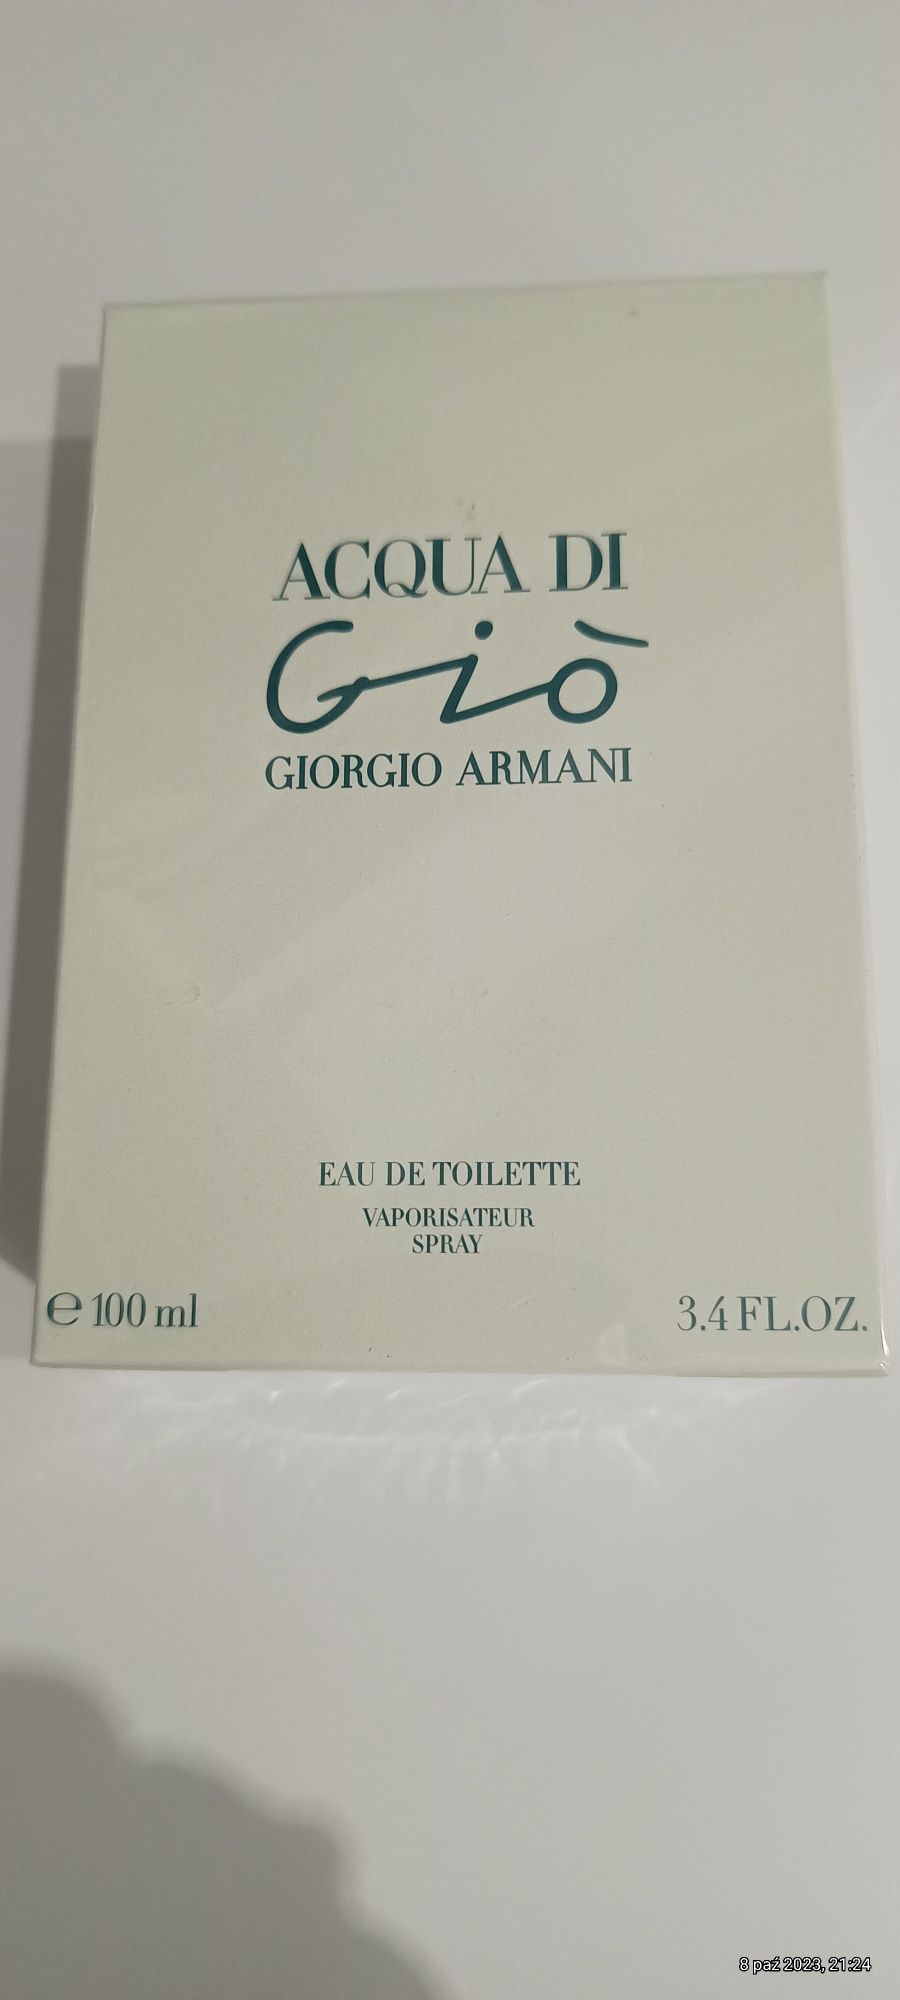 Acqua di Gio Giorgio Armani woda toaletowa eau de toilette 100ml